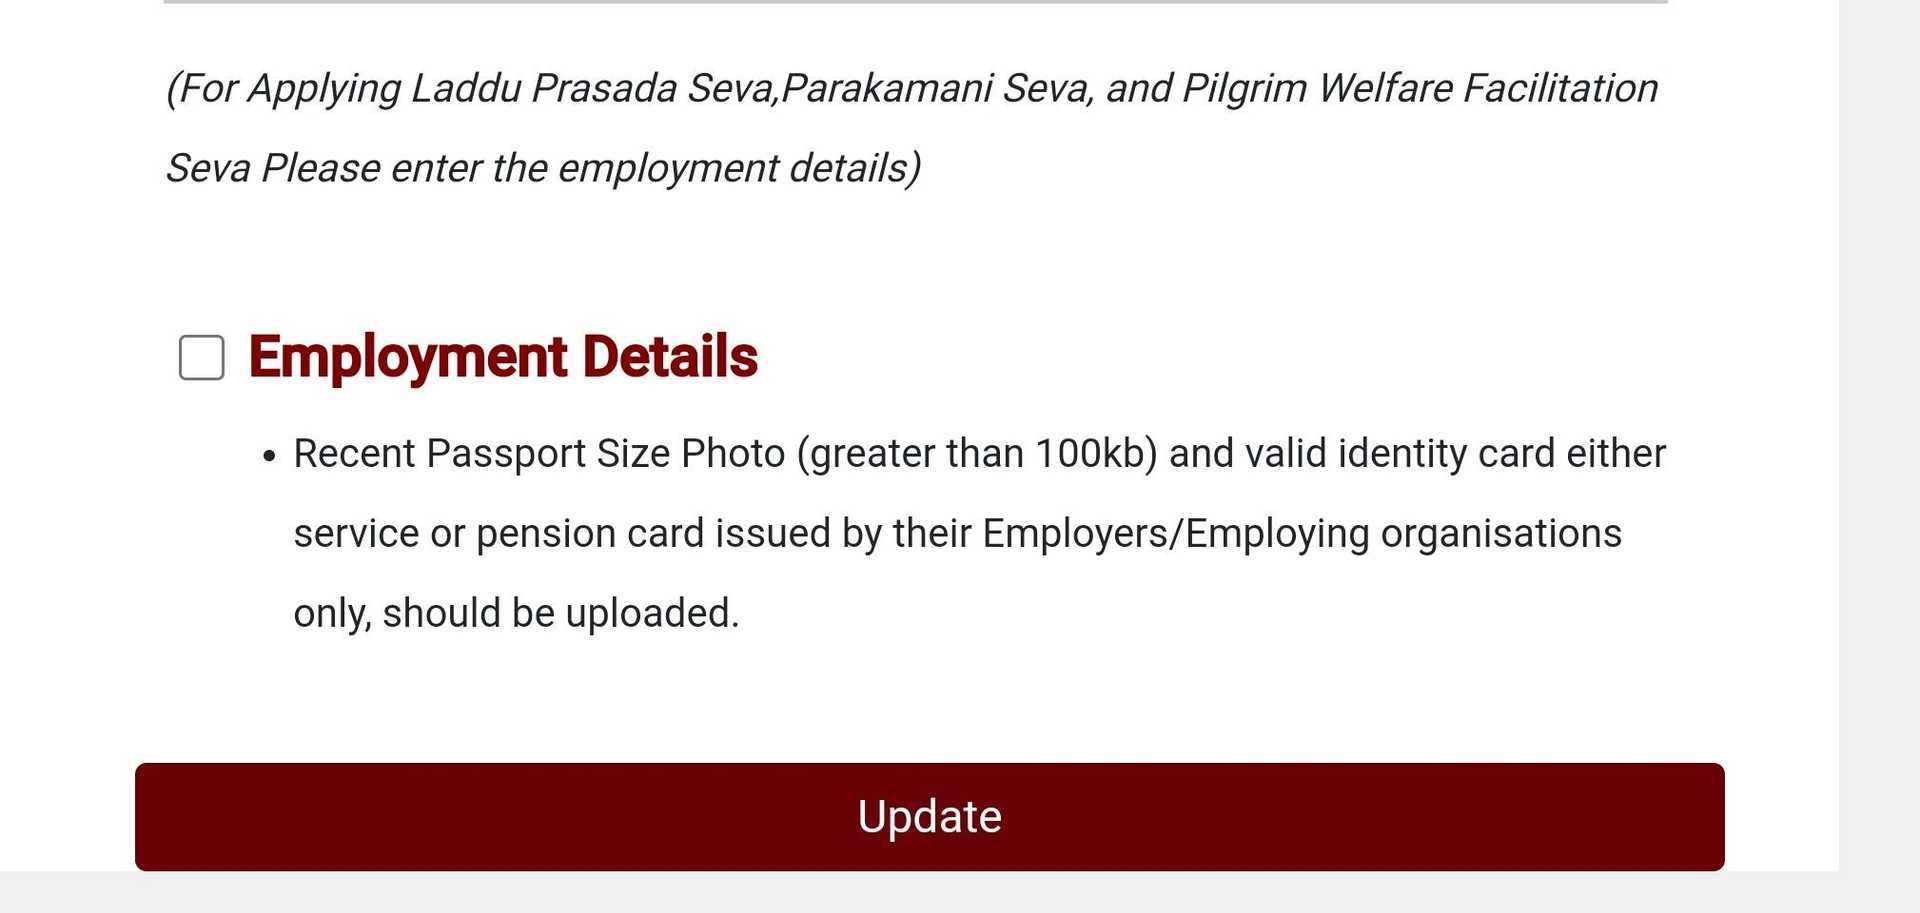 Optional: Parakamani Seva, Laddu counter & Pilgrim Welfare Facilitation Seva